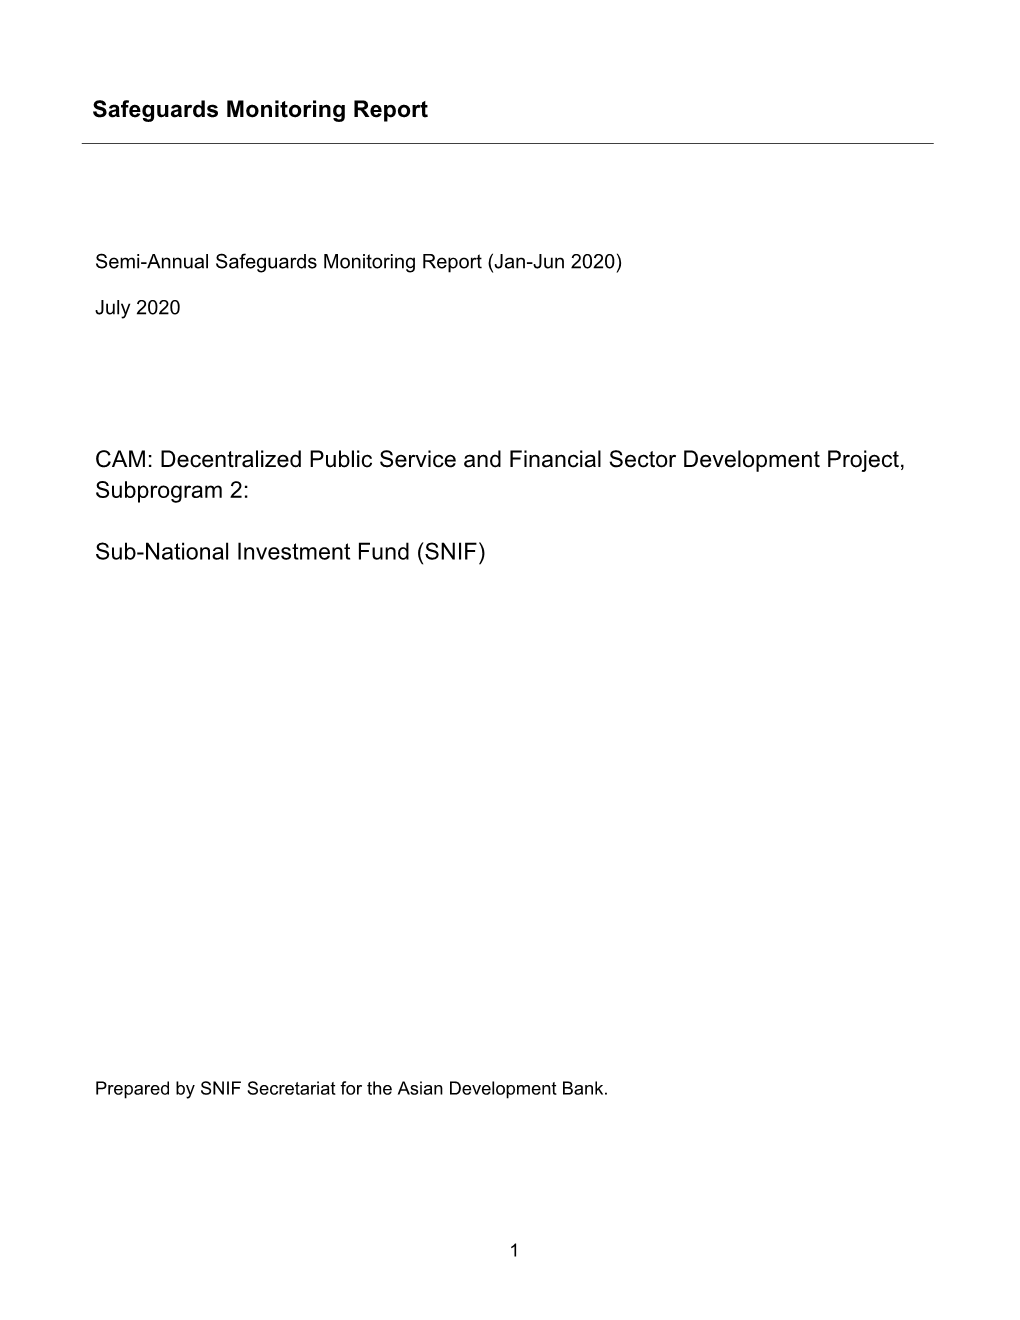 41392-023: Decentralized Public Service and Financial Management Sector Development Program (Subprogram 2)